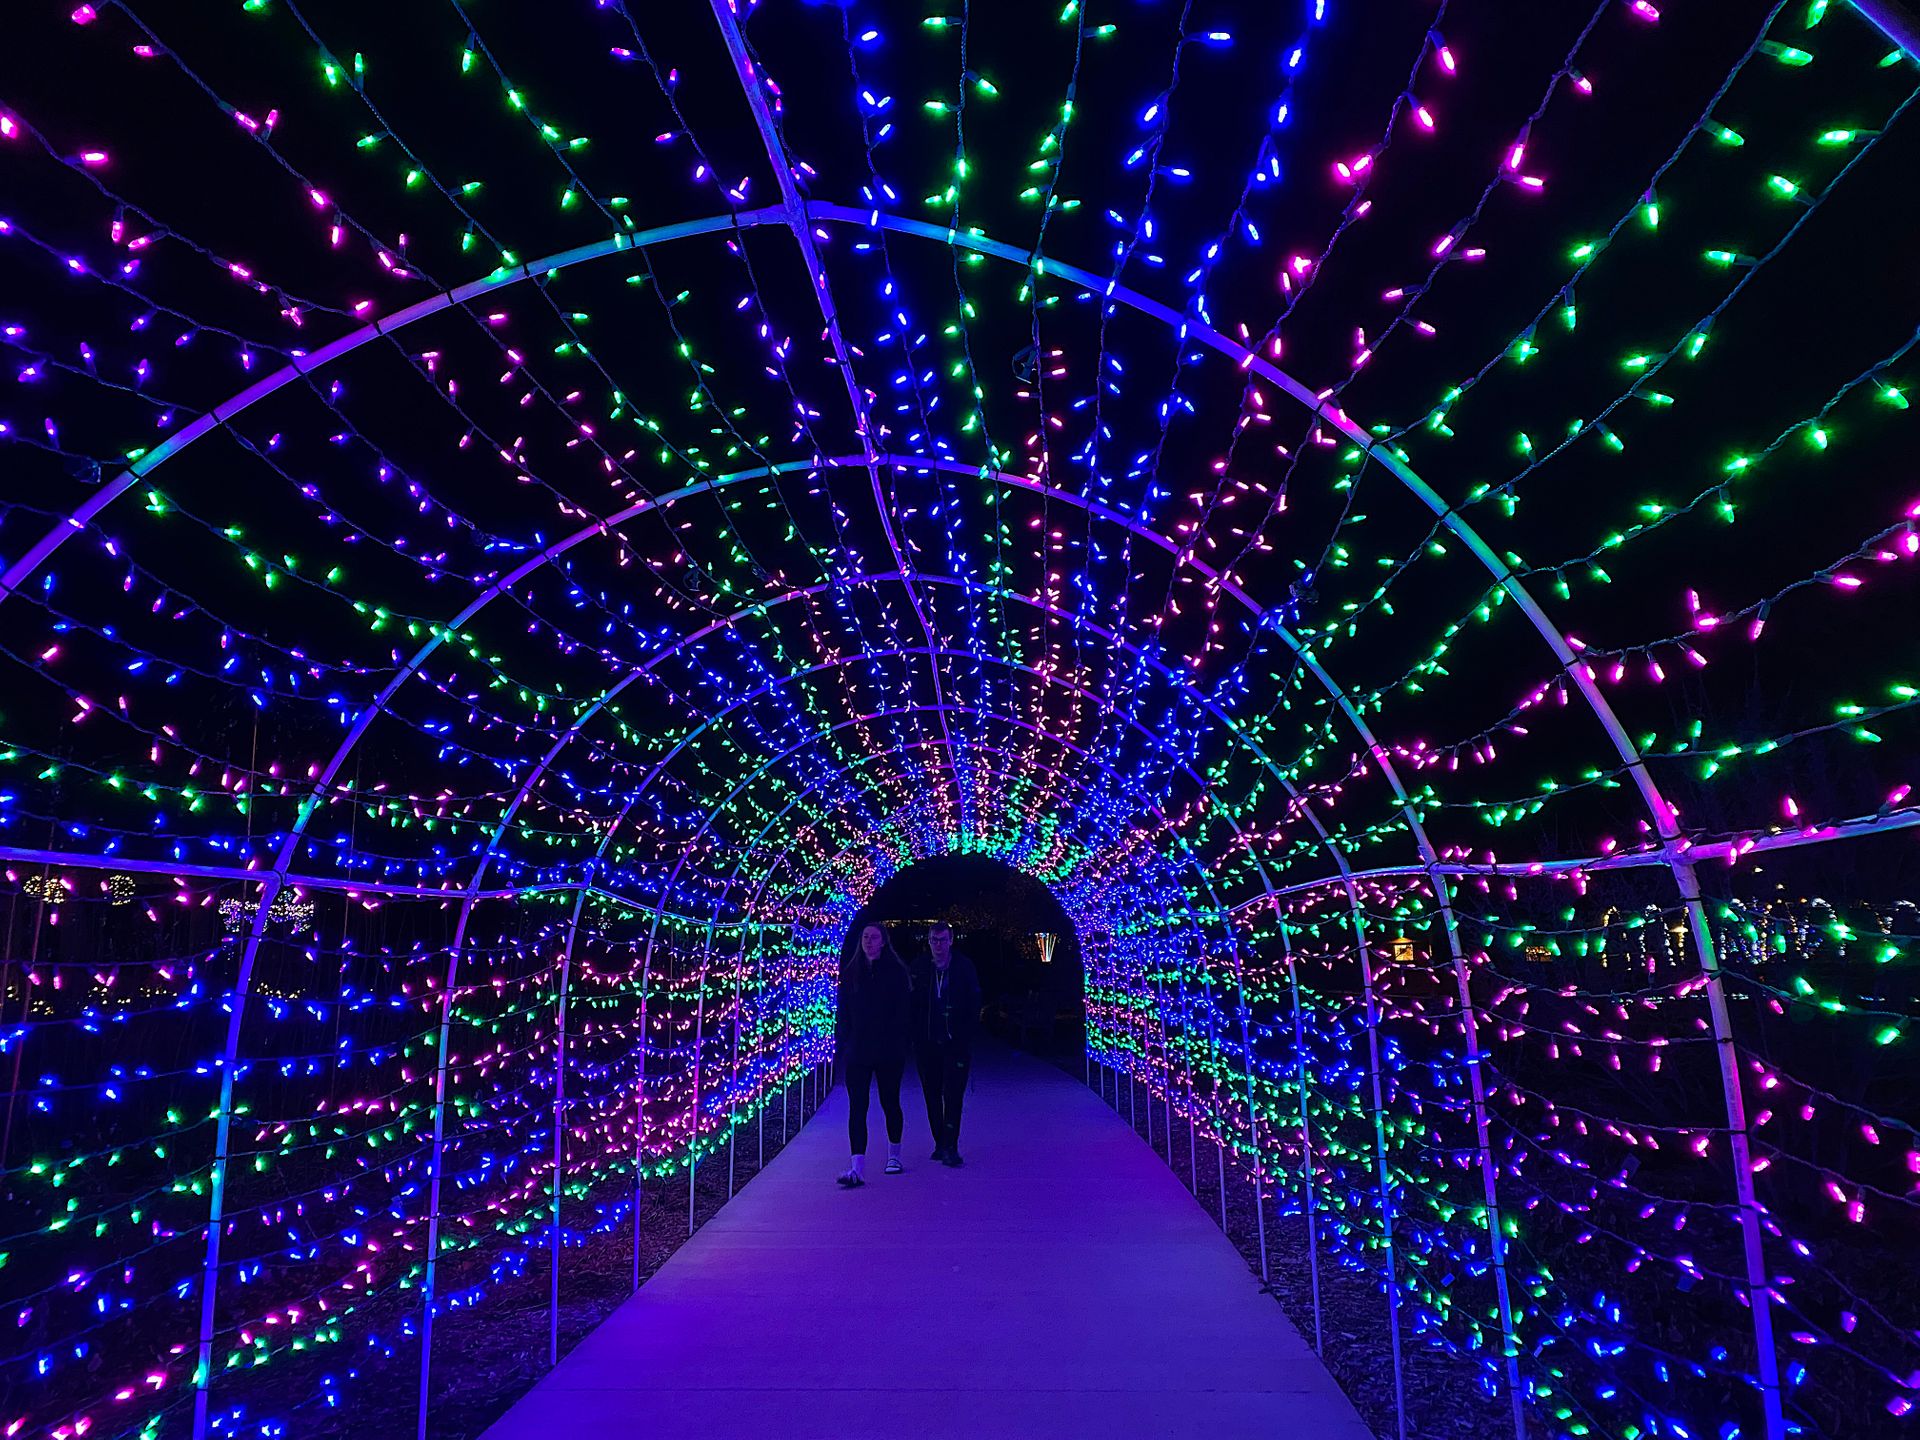 A lit-up walk-through tunnel at Reiman Garden's Winter Wonderscape Holiday Light Show.